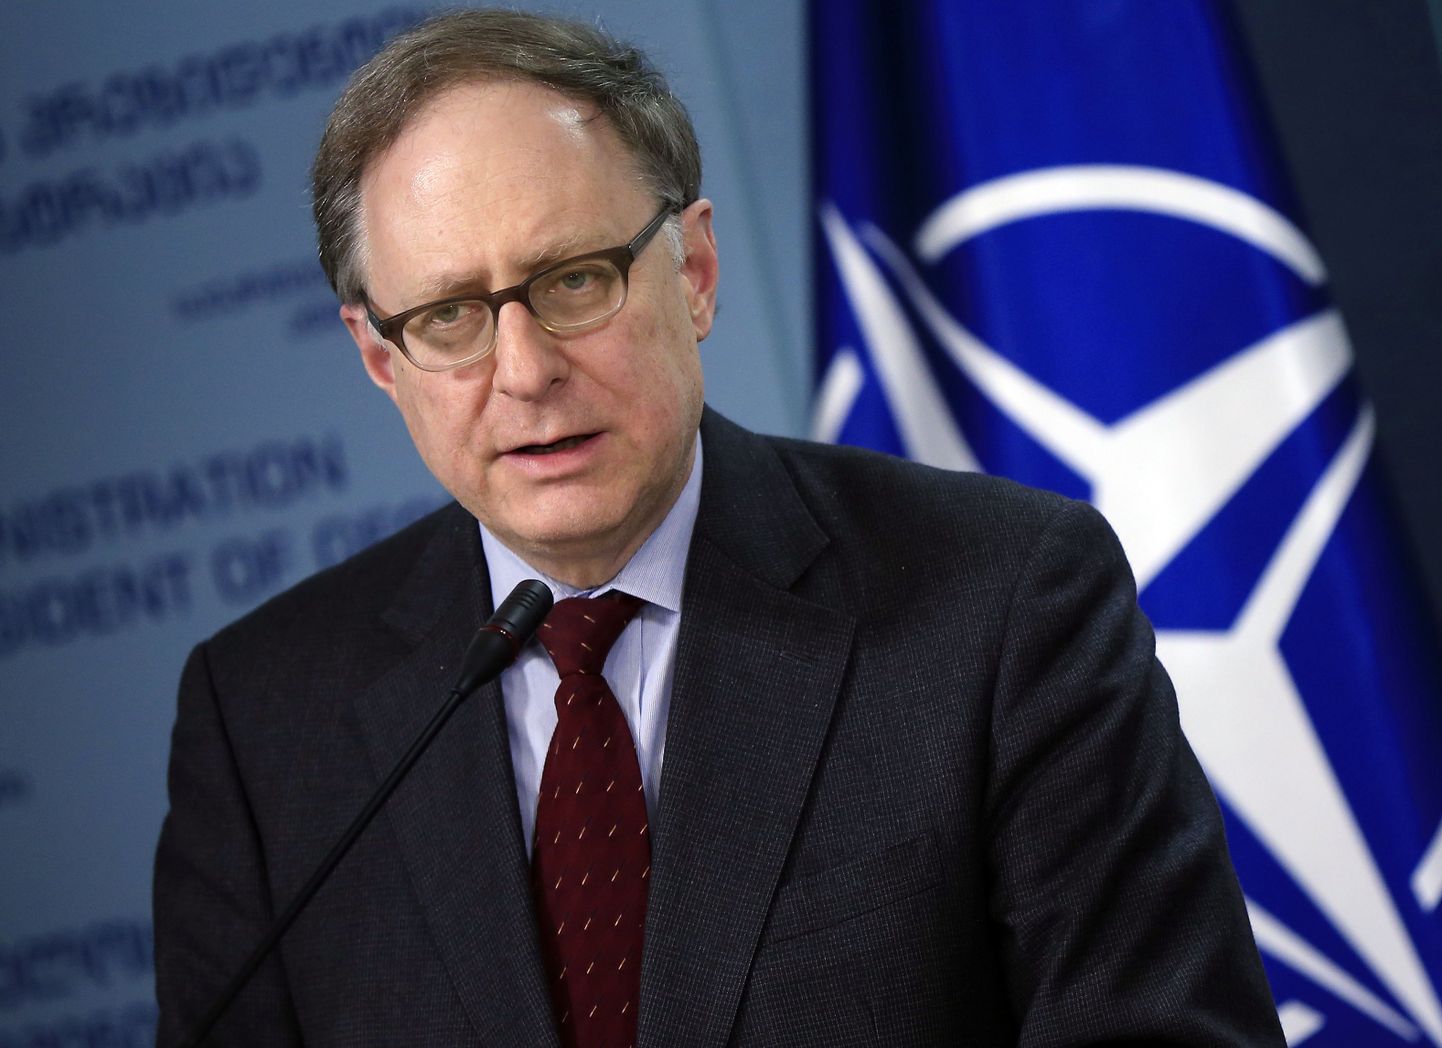 NATO asepeasekretär Alexander Vershbow.